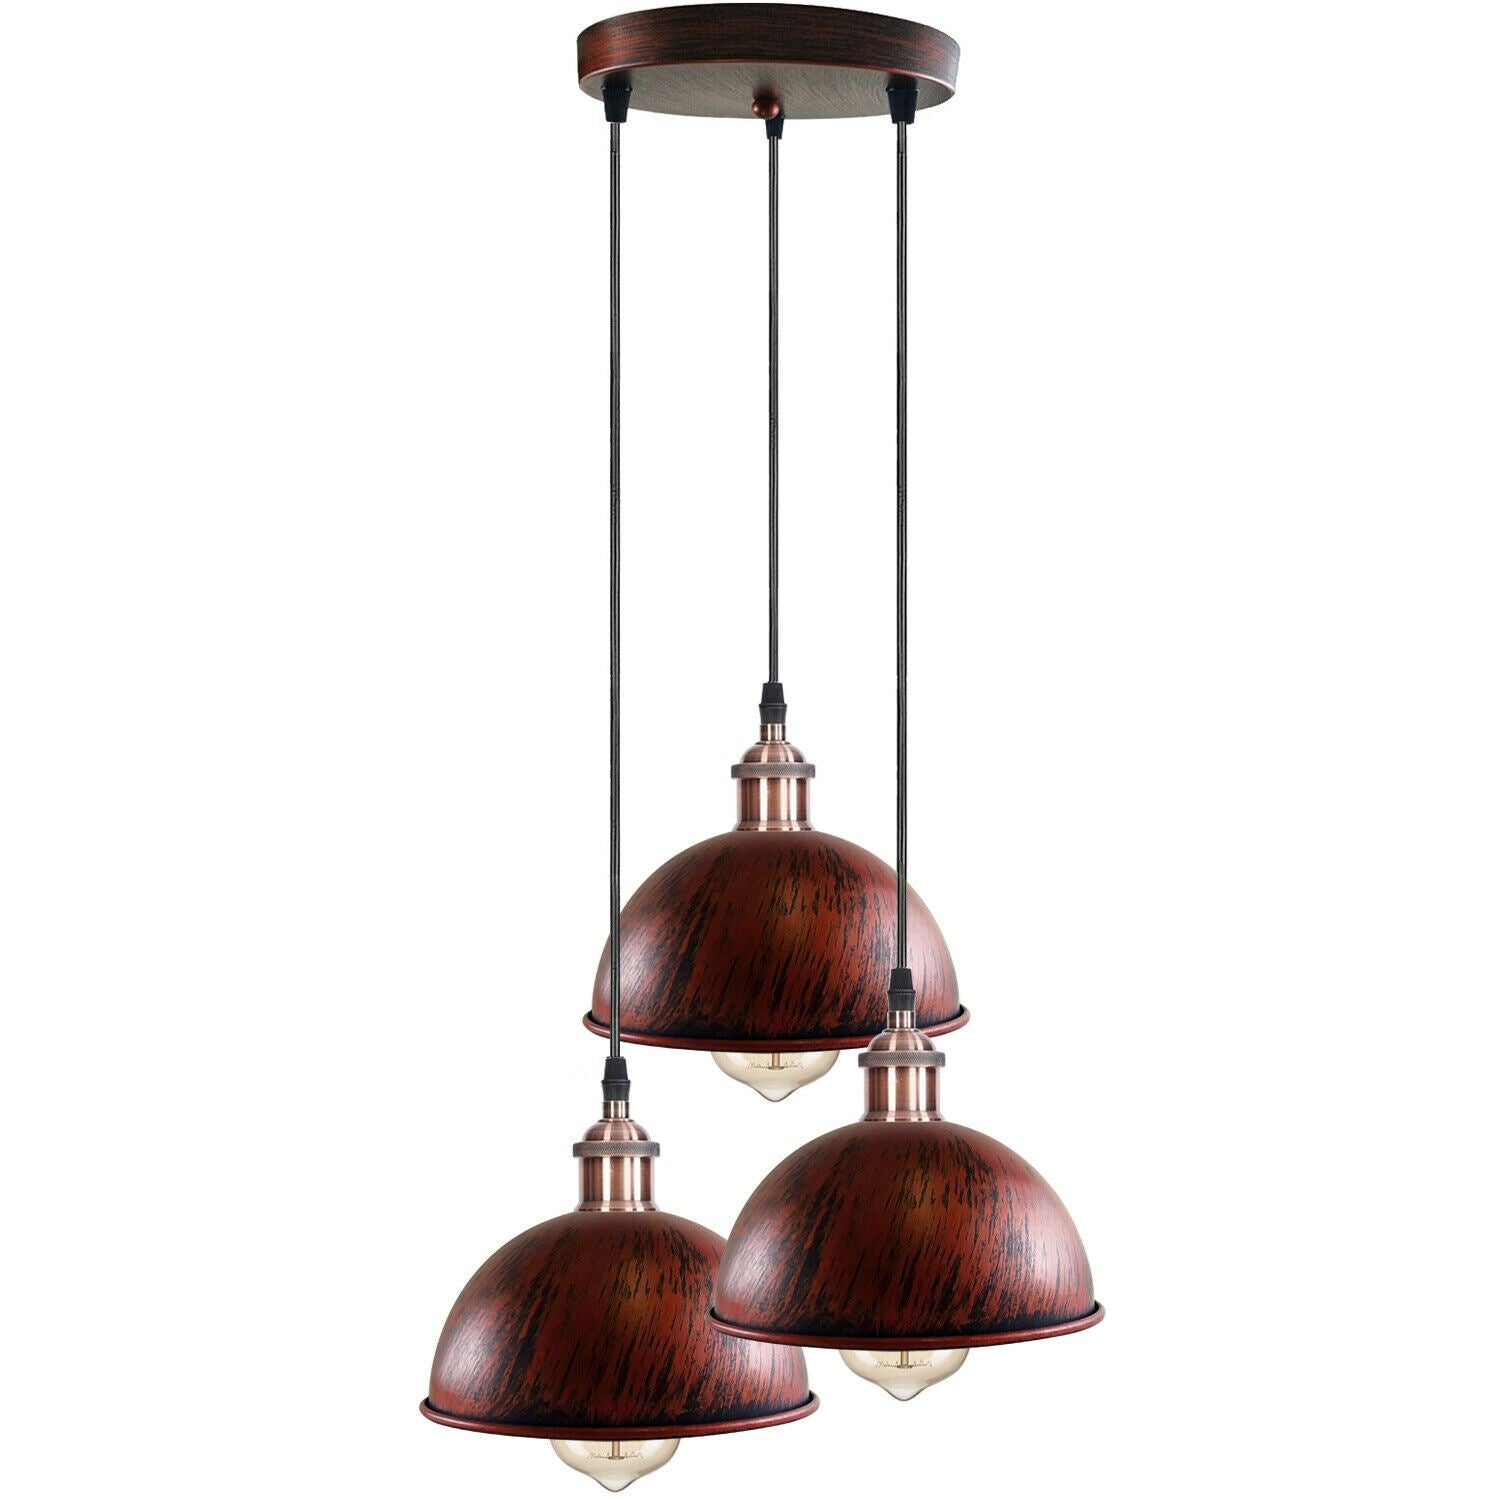 Vintage Industrial Retro 3Head Dome Ceiling Pendant Lamp Shade Light 